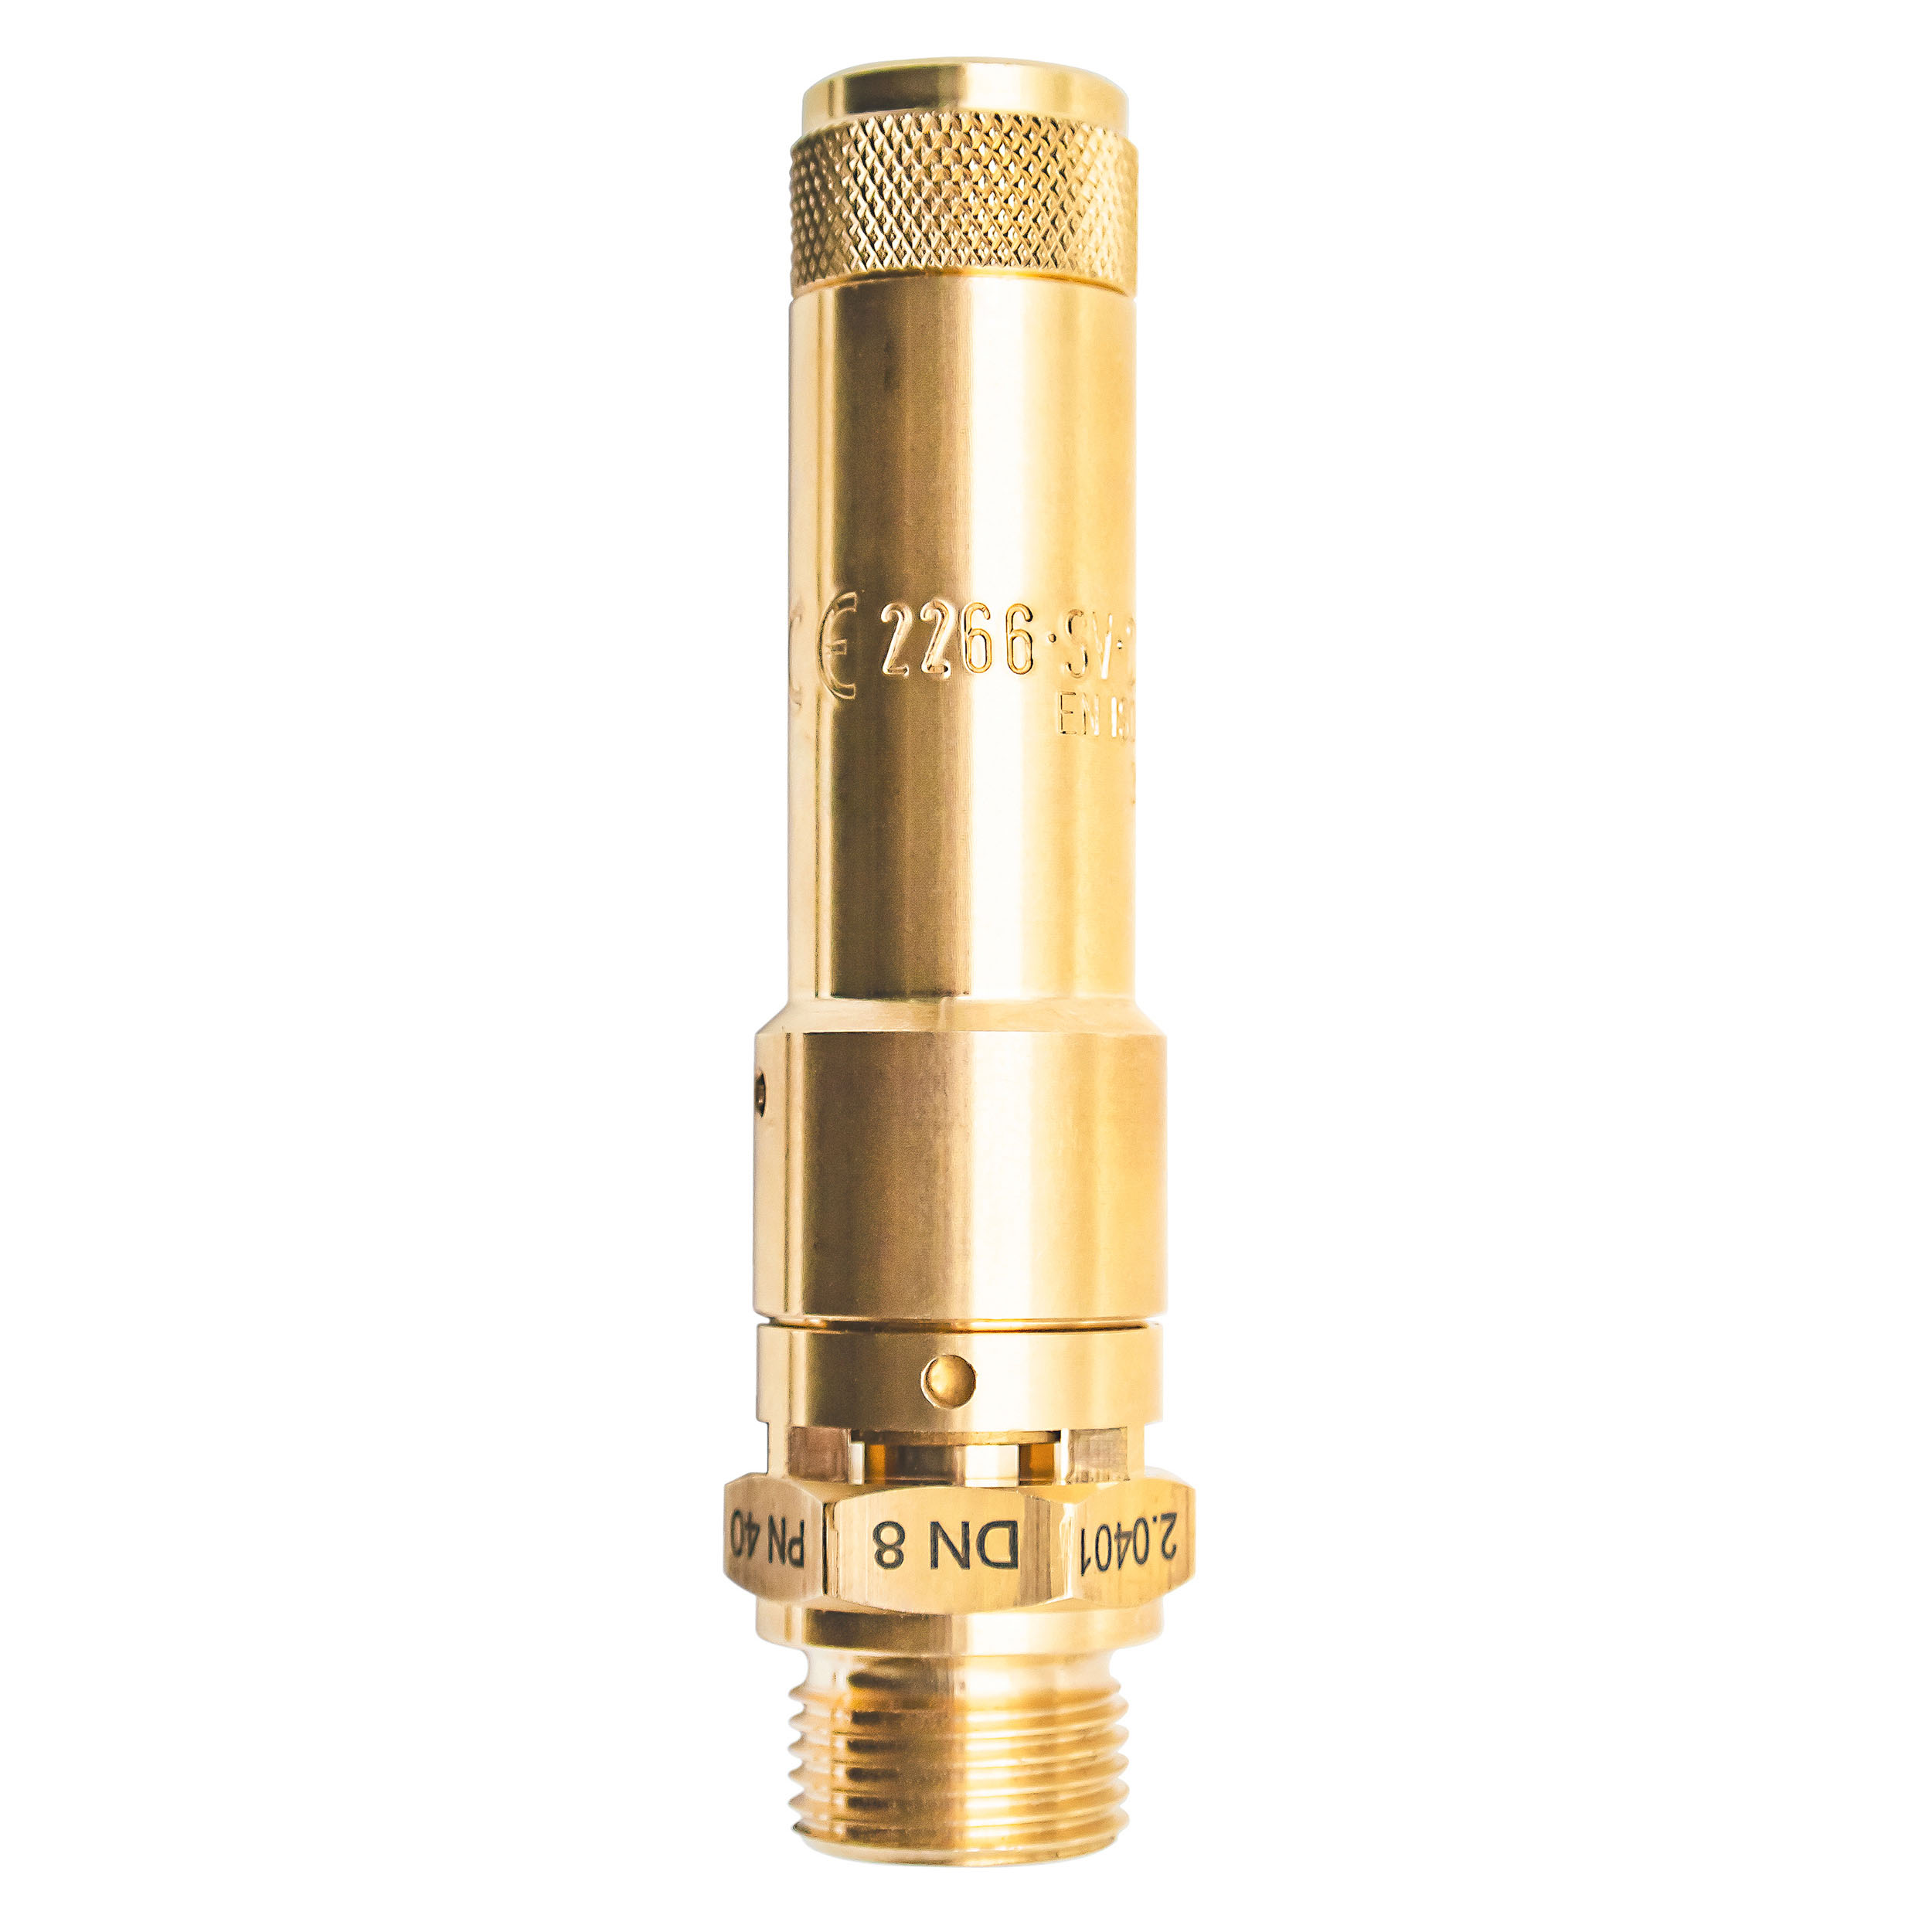 Component-tested safety valve DN 8, G⅜, pressure: 3.1-5 bar